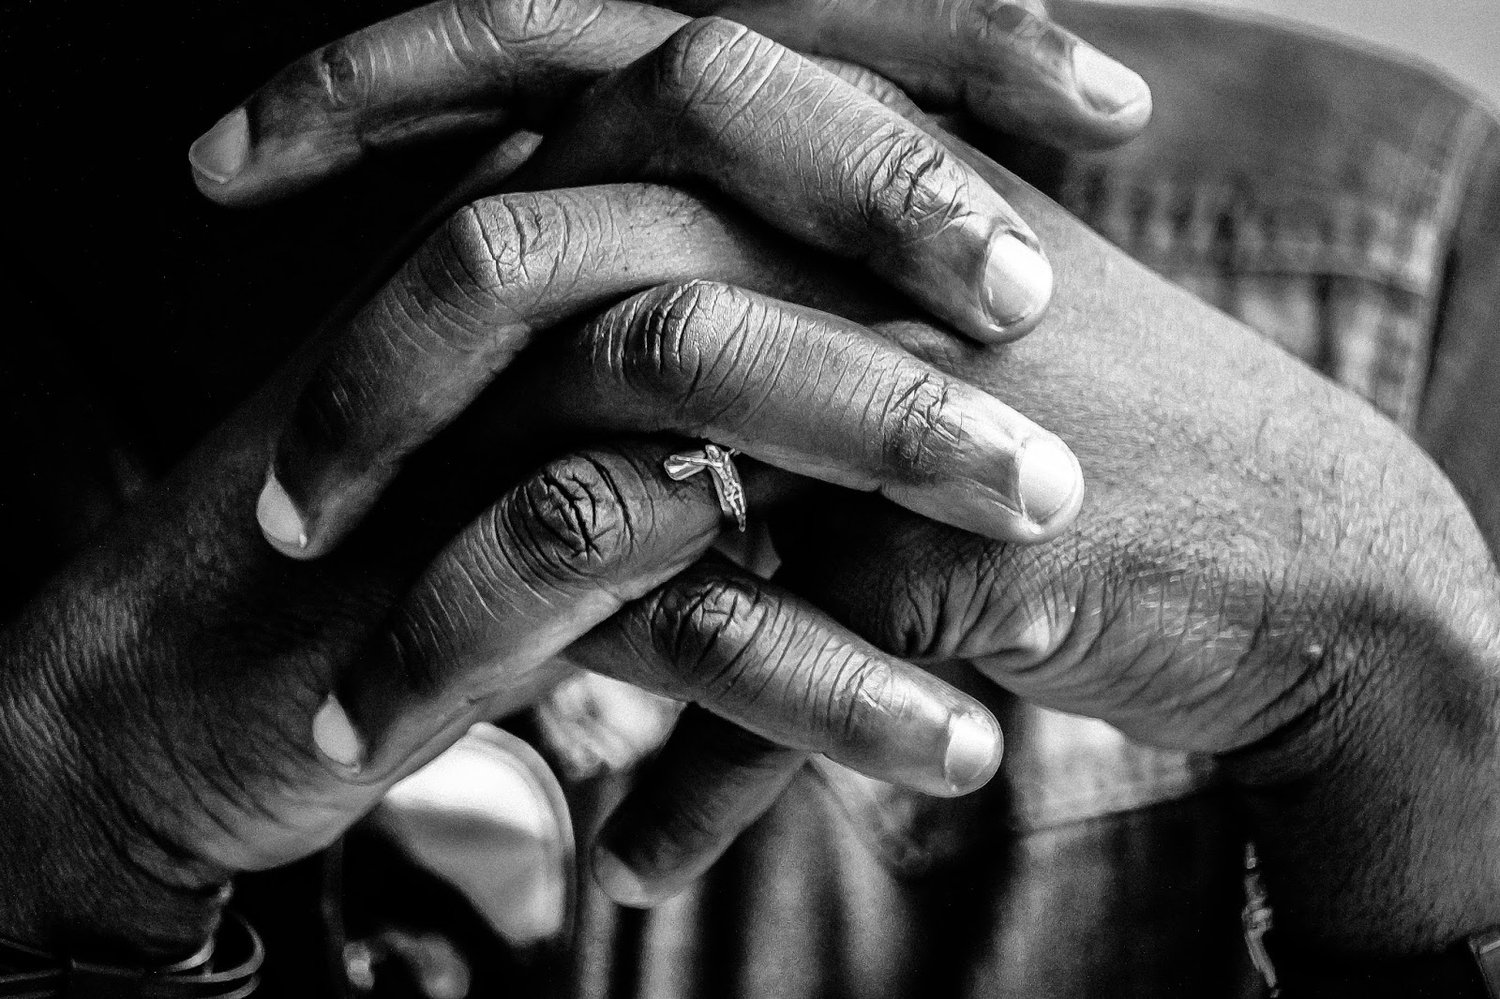 praying hands of a black man